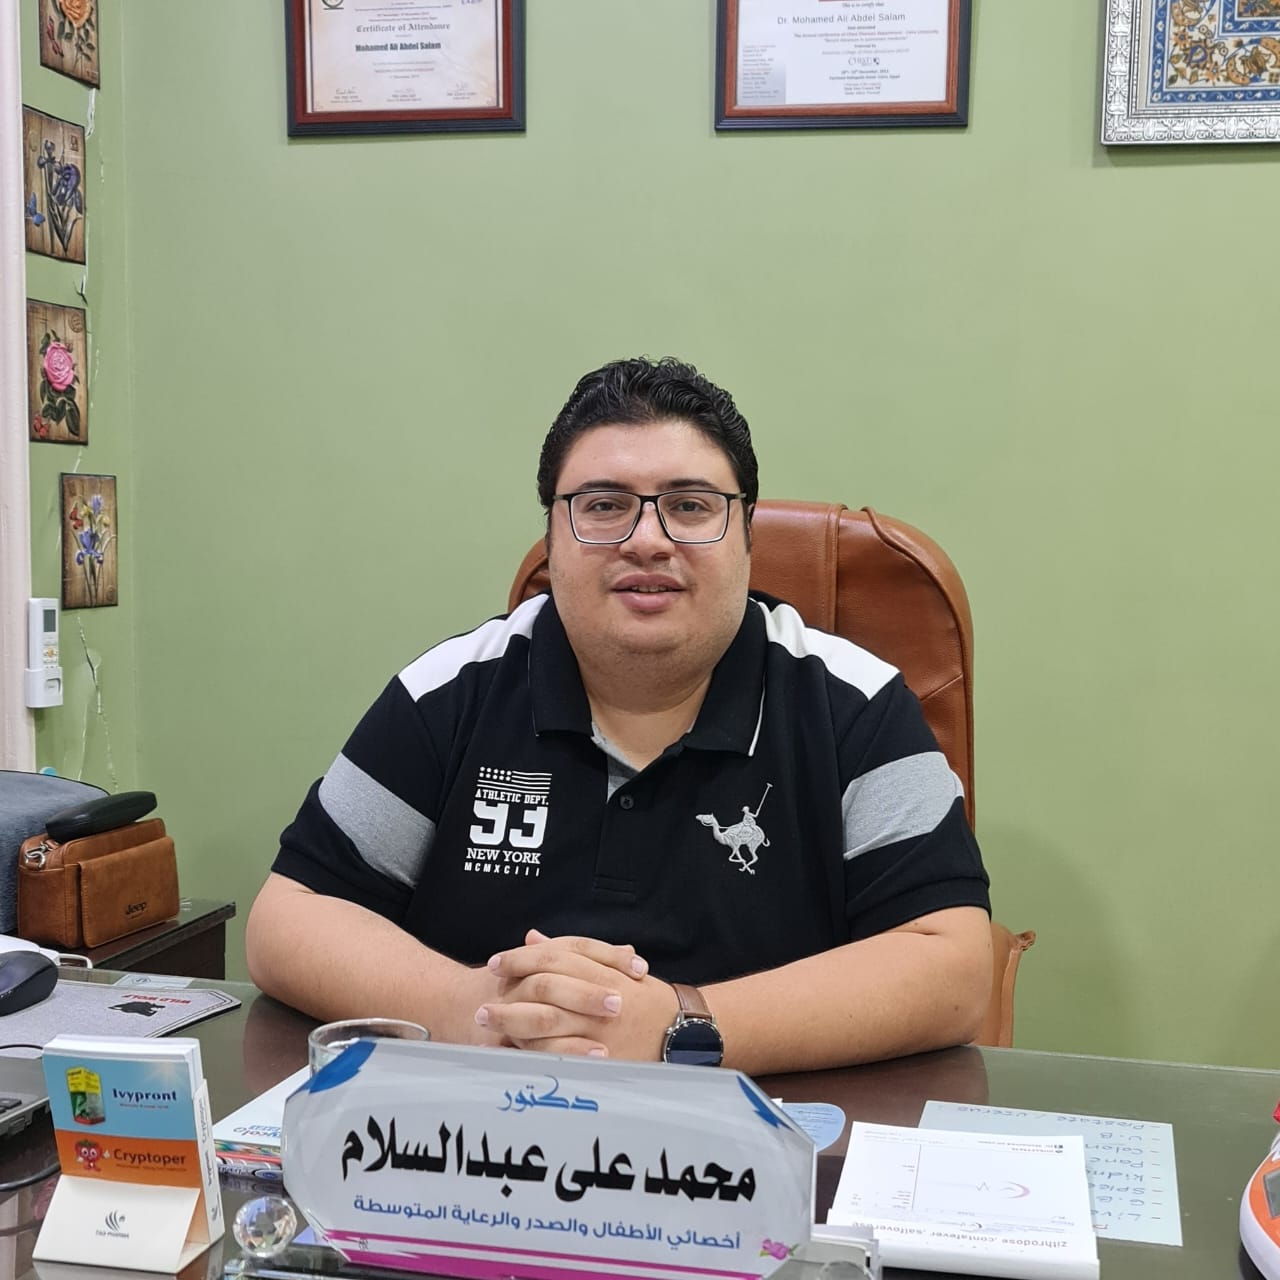 Dr. Mohamed Ali Abdelsalam